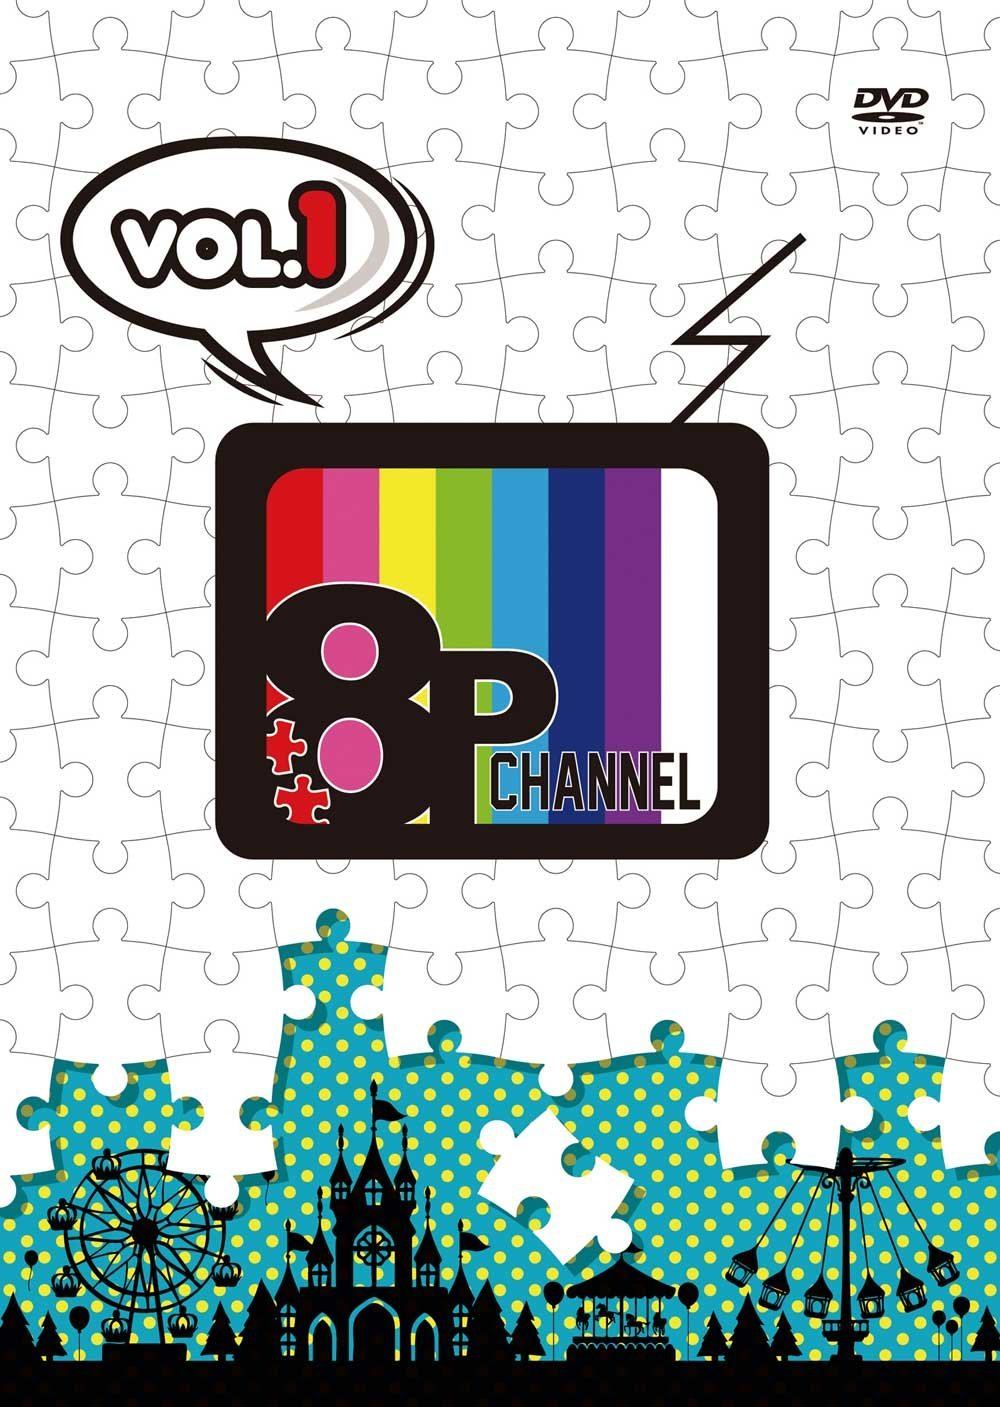 8P Channel Vol.1